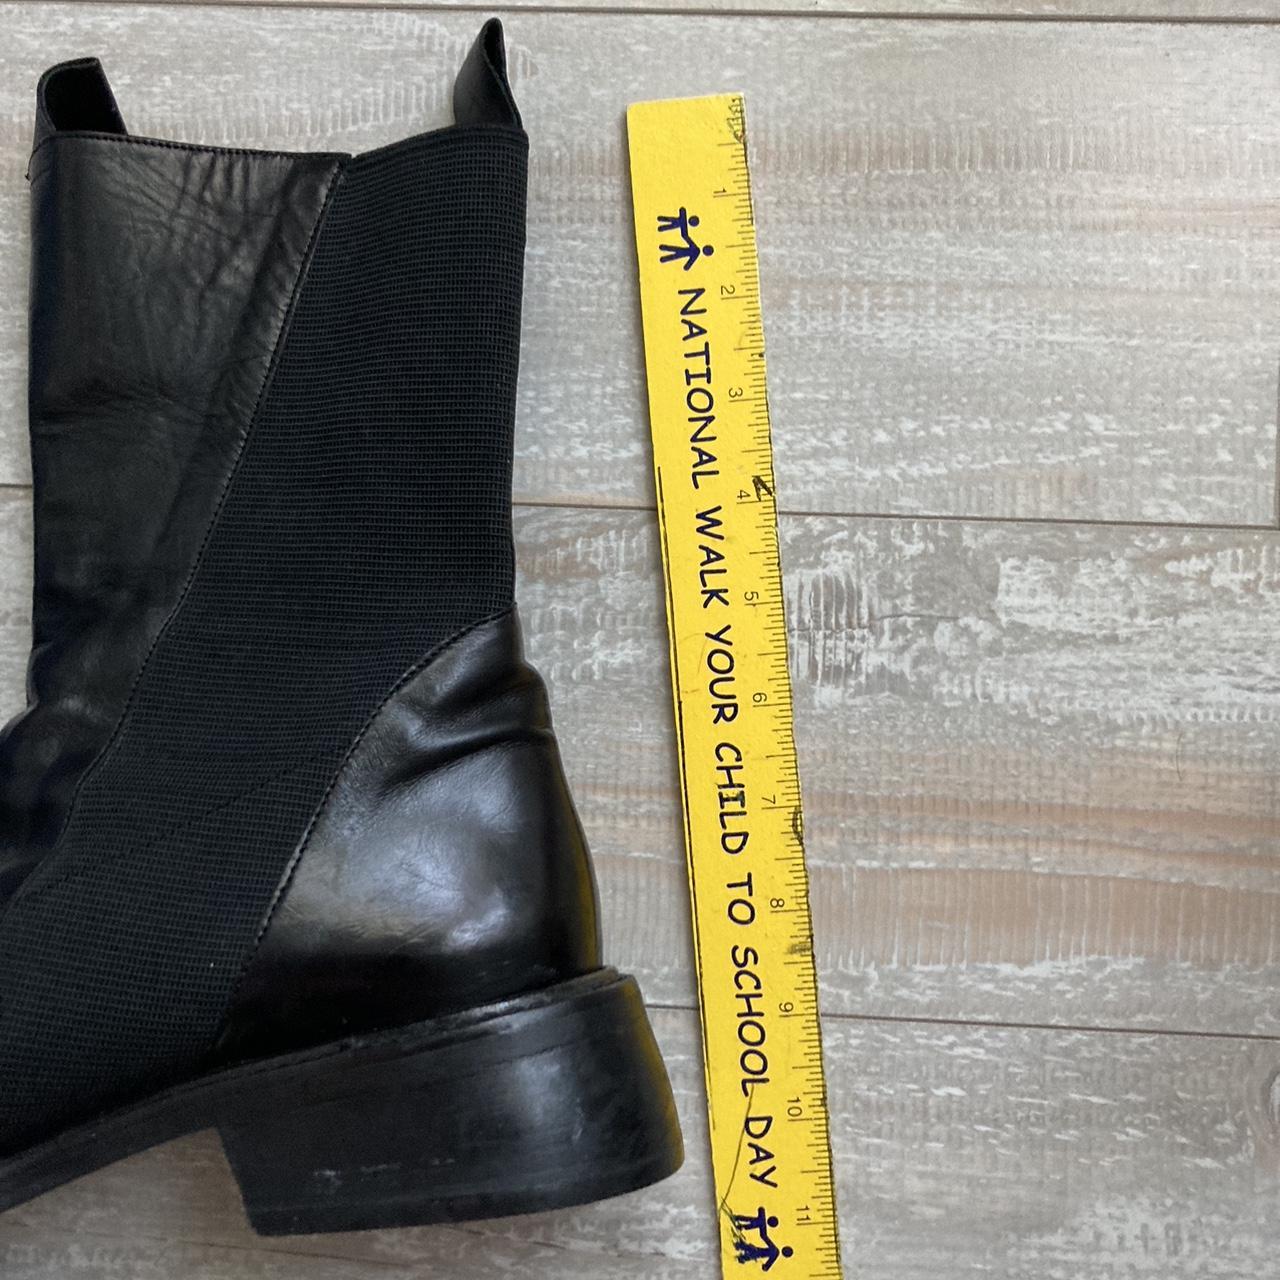 Donald Pliner Women's Black Boots (4)